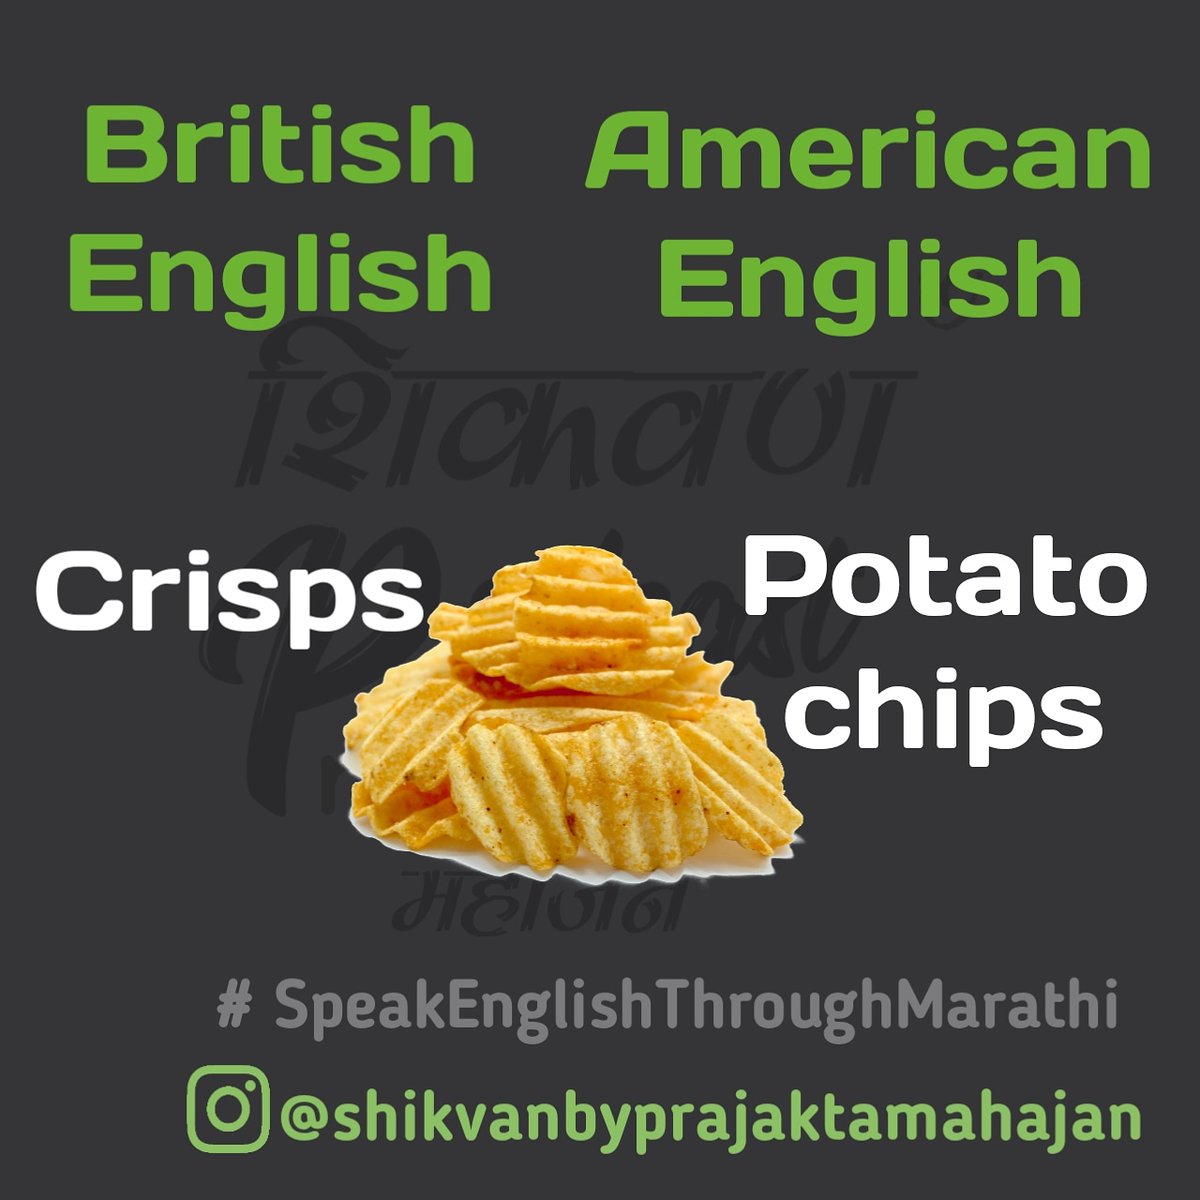 American Vs British English
#americanenglis #britishenglish #english #vocabulary #learnenglish #englishtips #englishteacher #ingl #englishgrammar  #englishinmarathi #englishonlinecourse #SpeakEnglishThroughMarathi #marathieducation #marathi #marathipodcast #shikvan